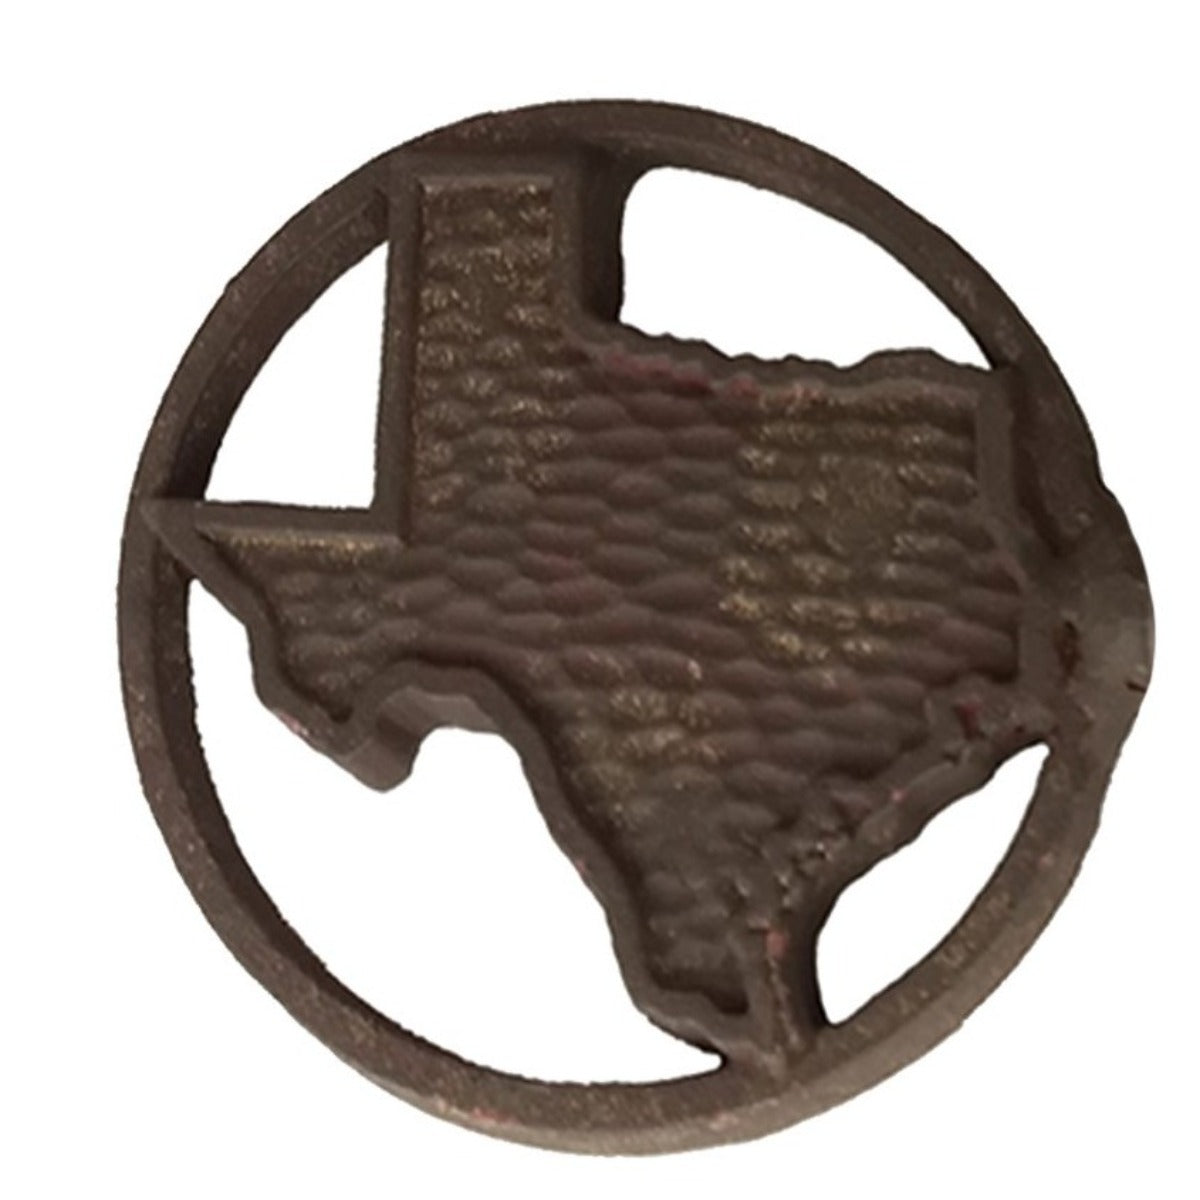 Texas Medallion Scarf Holders